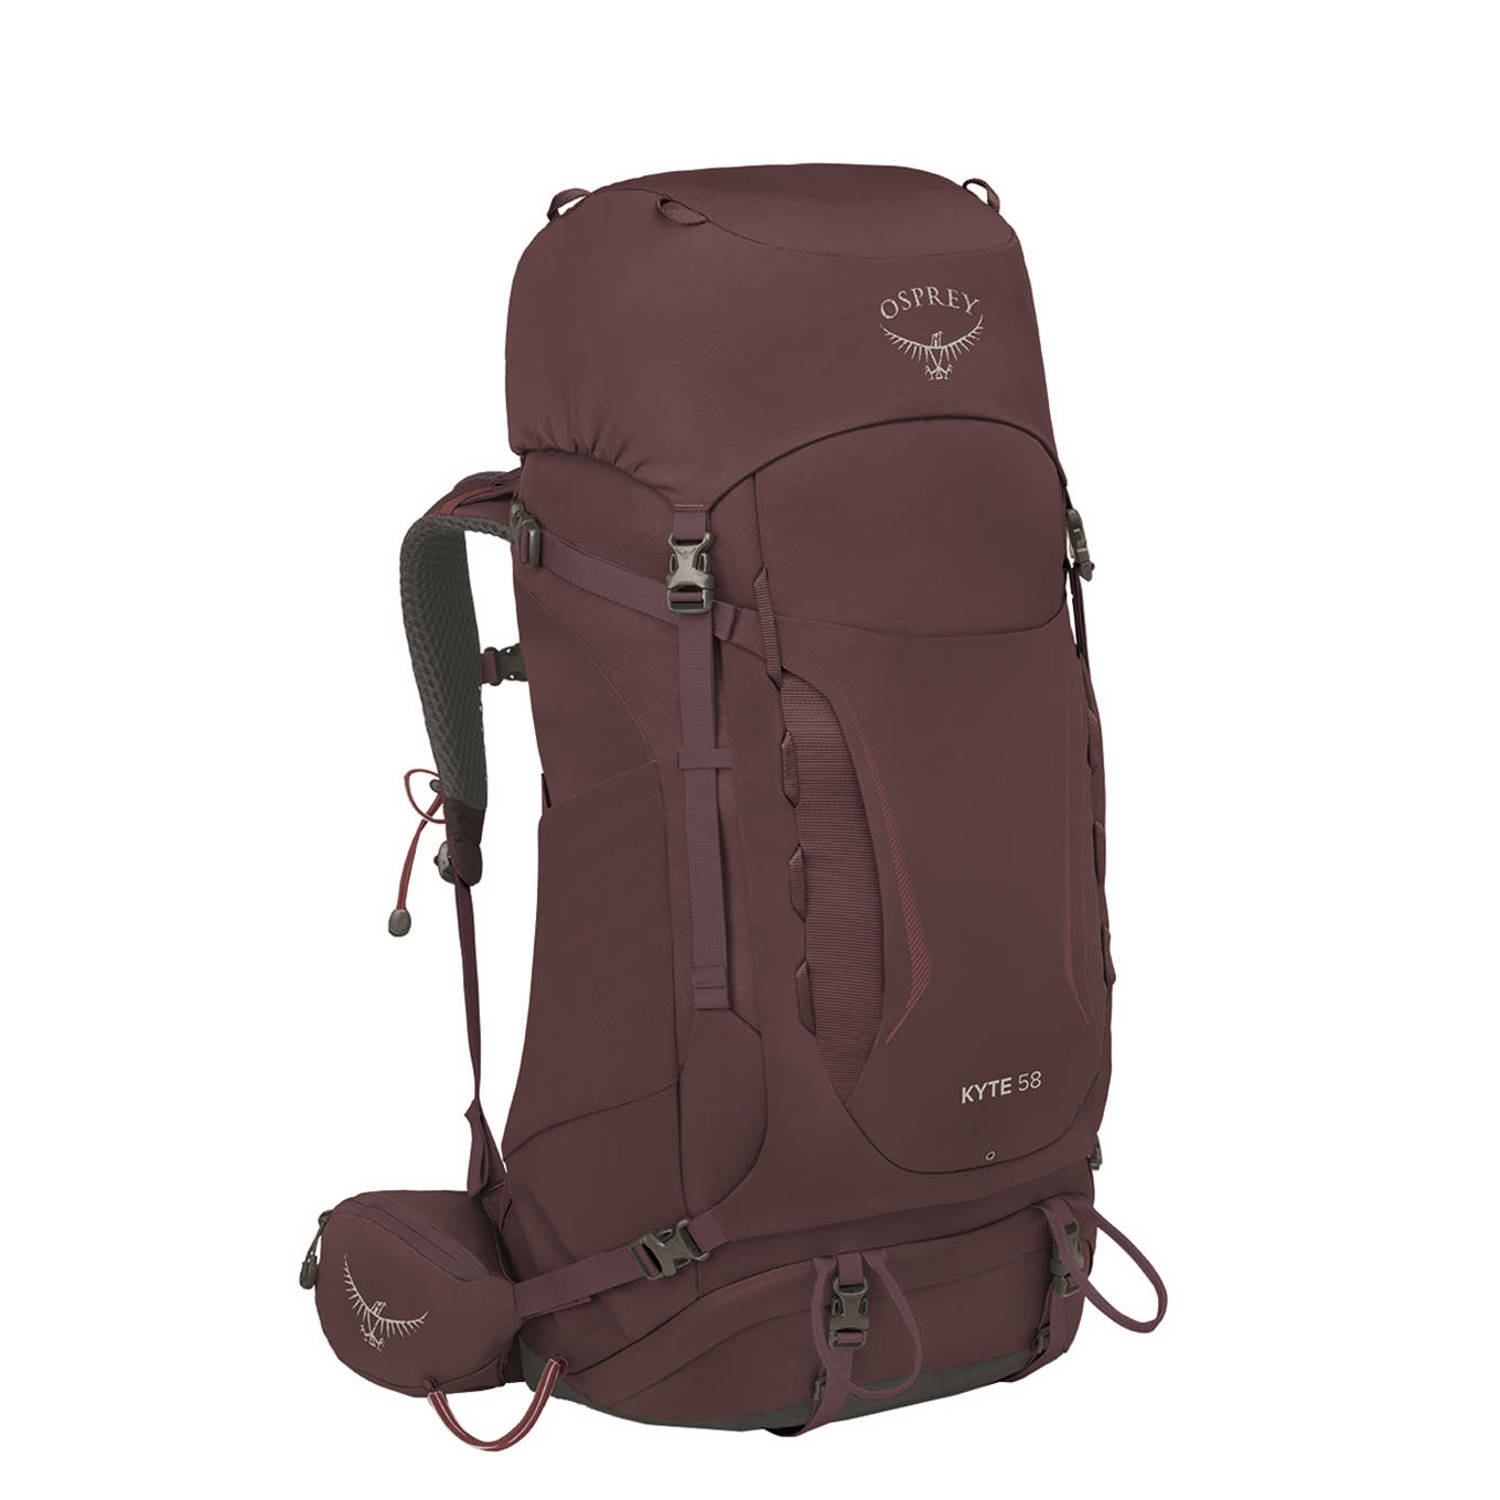 Osprey backpack Kyte 58L WM L bordeauxrood